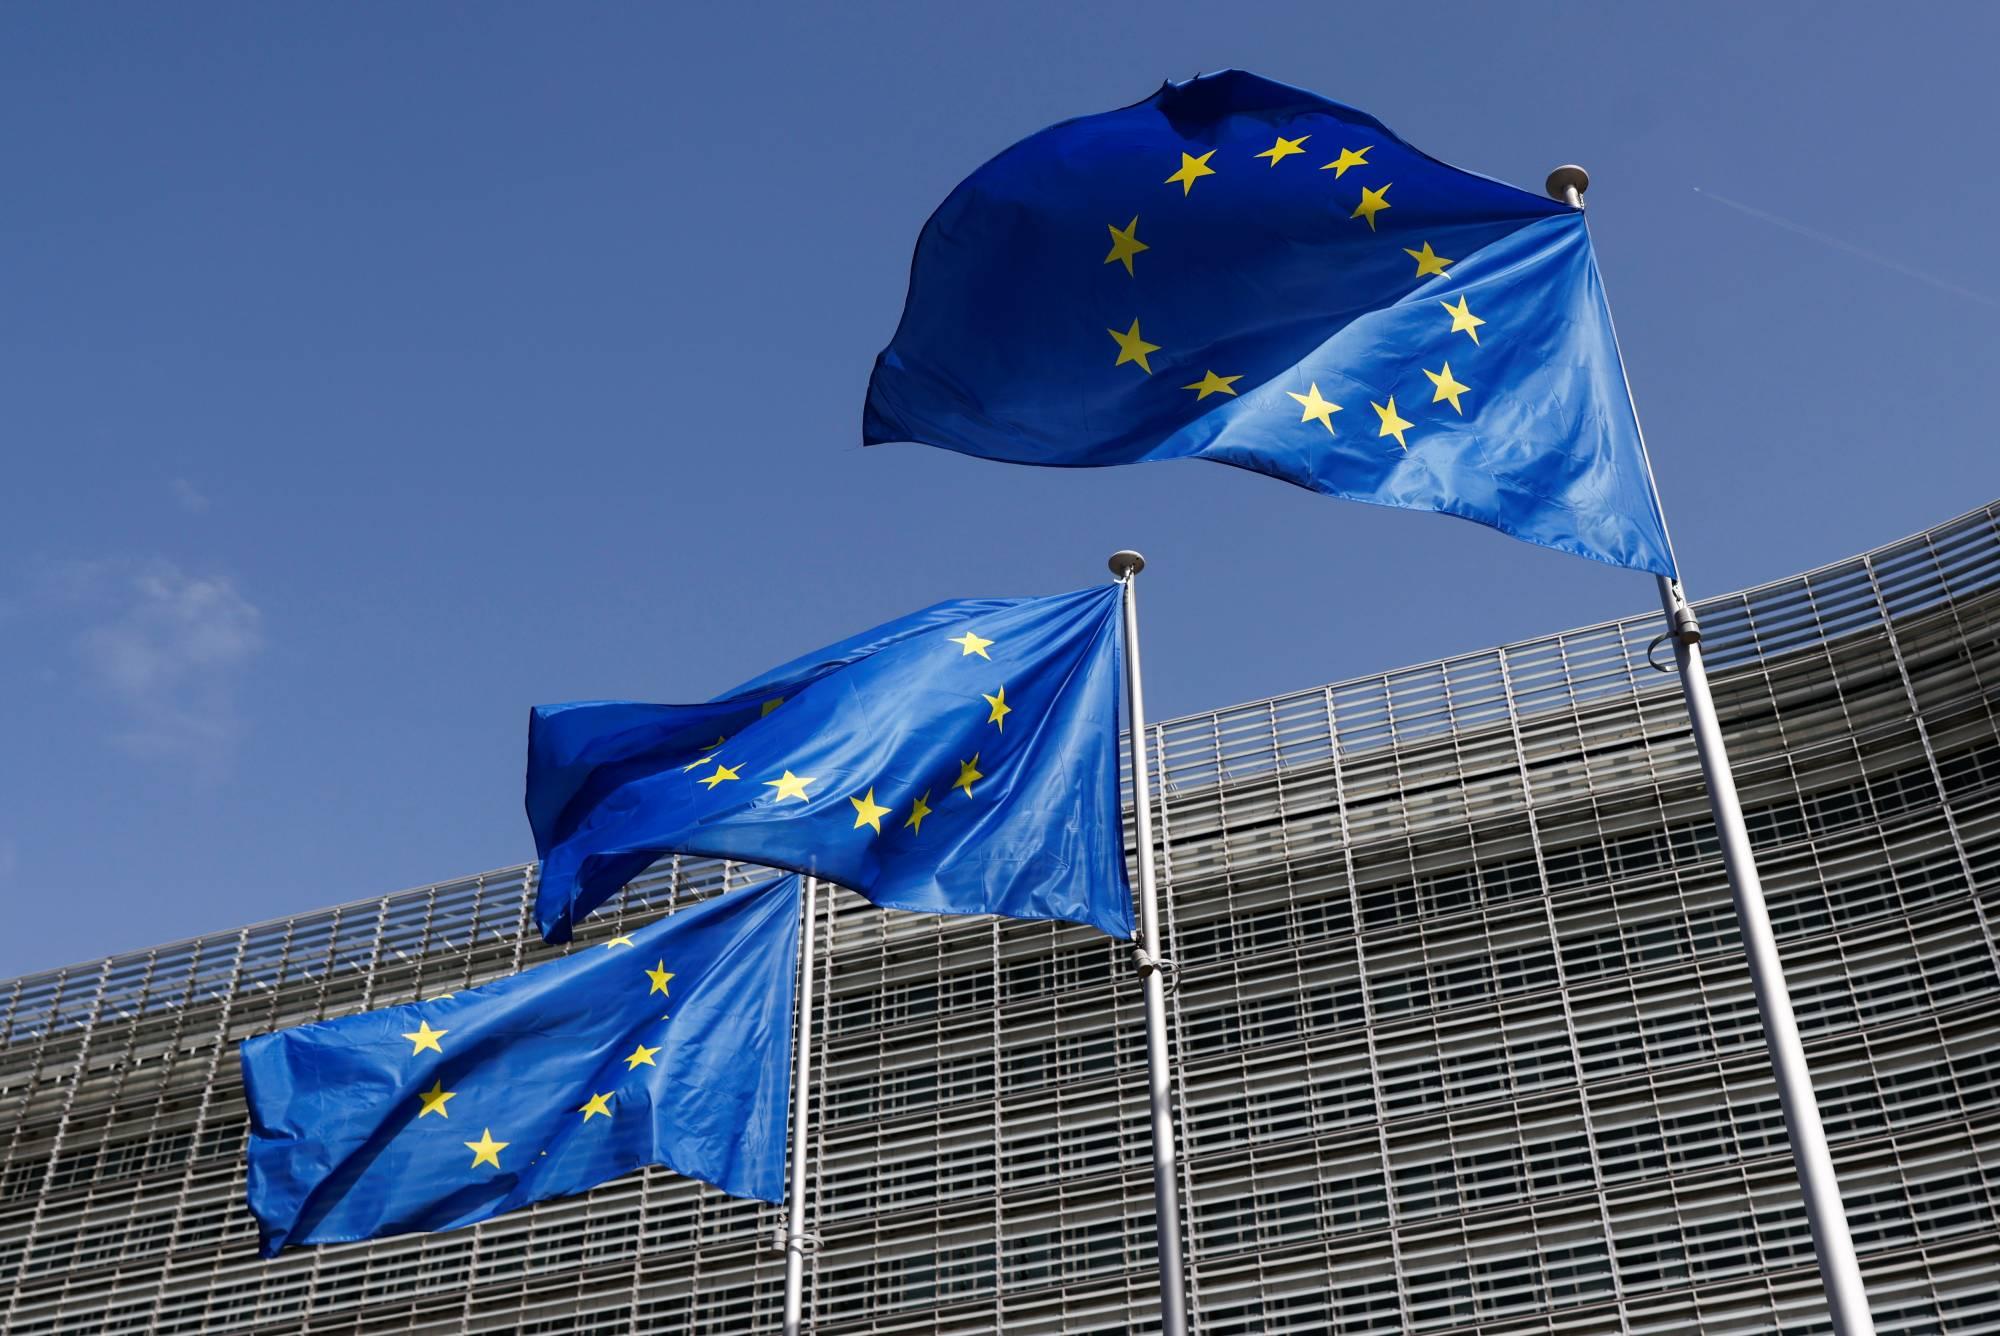 European Union flags flutter outside the EU Commission headquarters